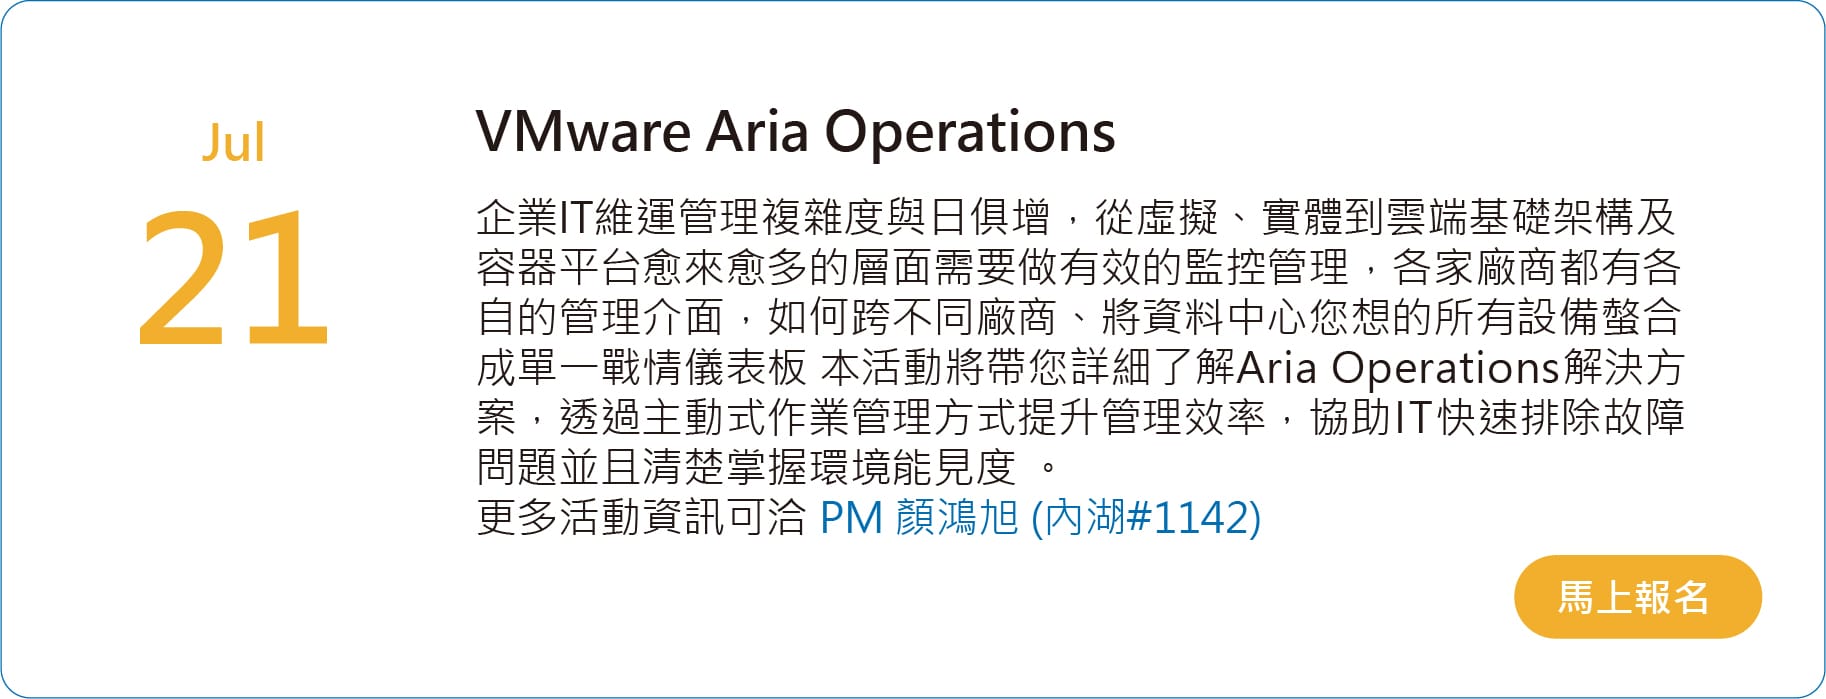 7/21 VMware Aria Operations